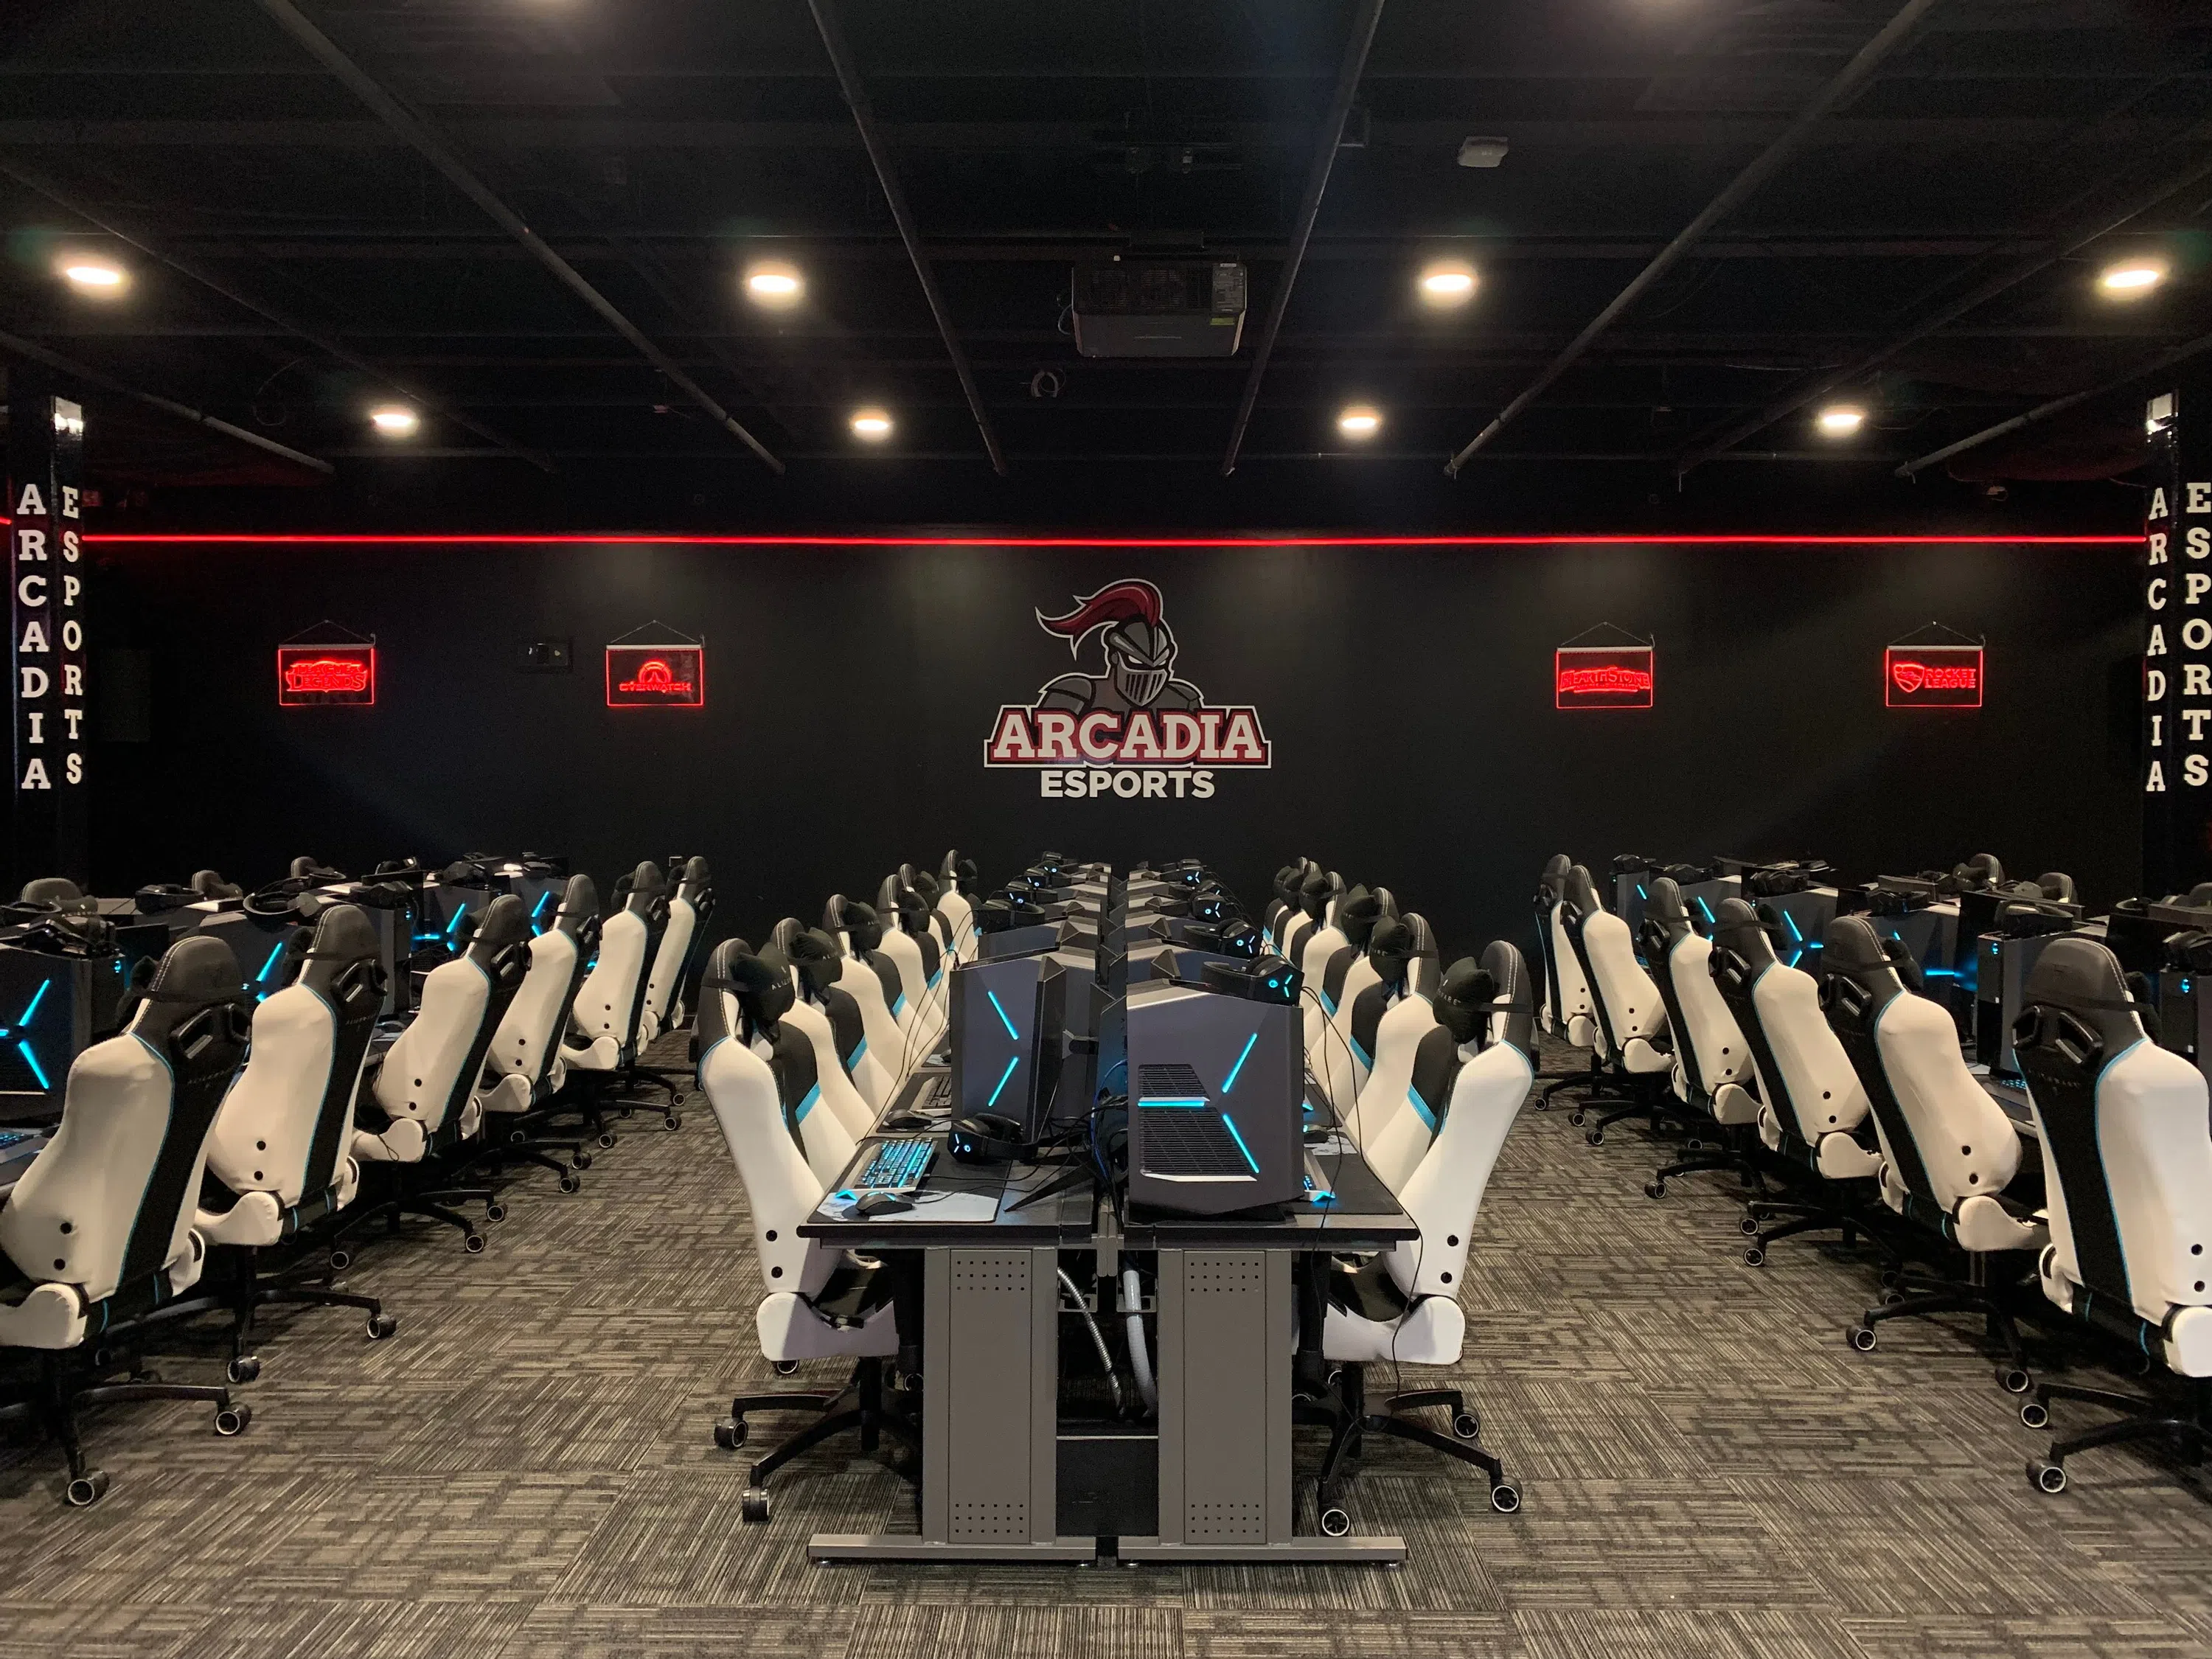 Arcadia's esports arena